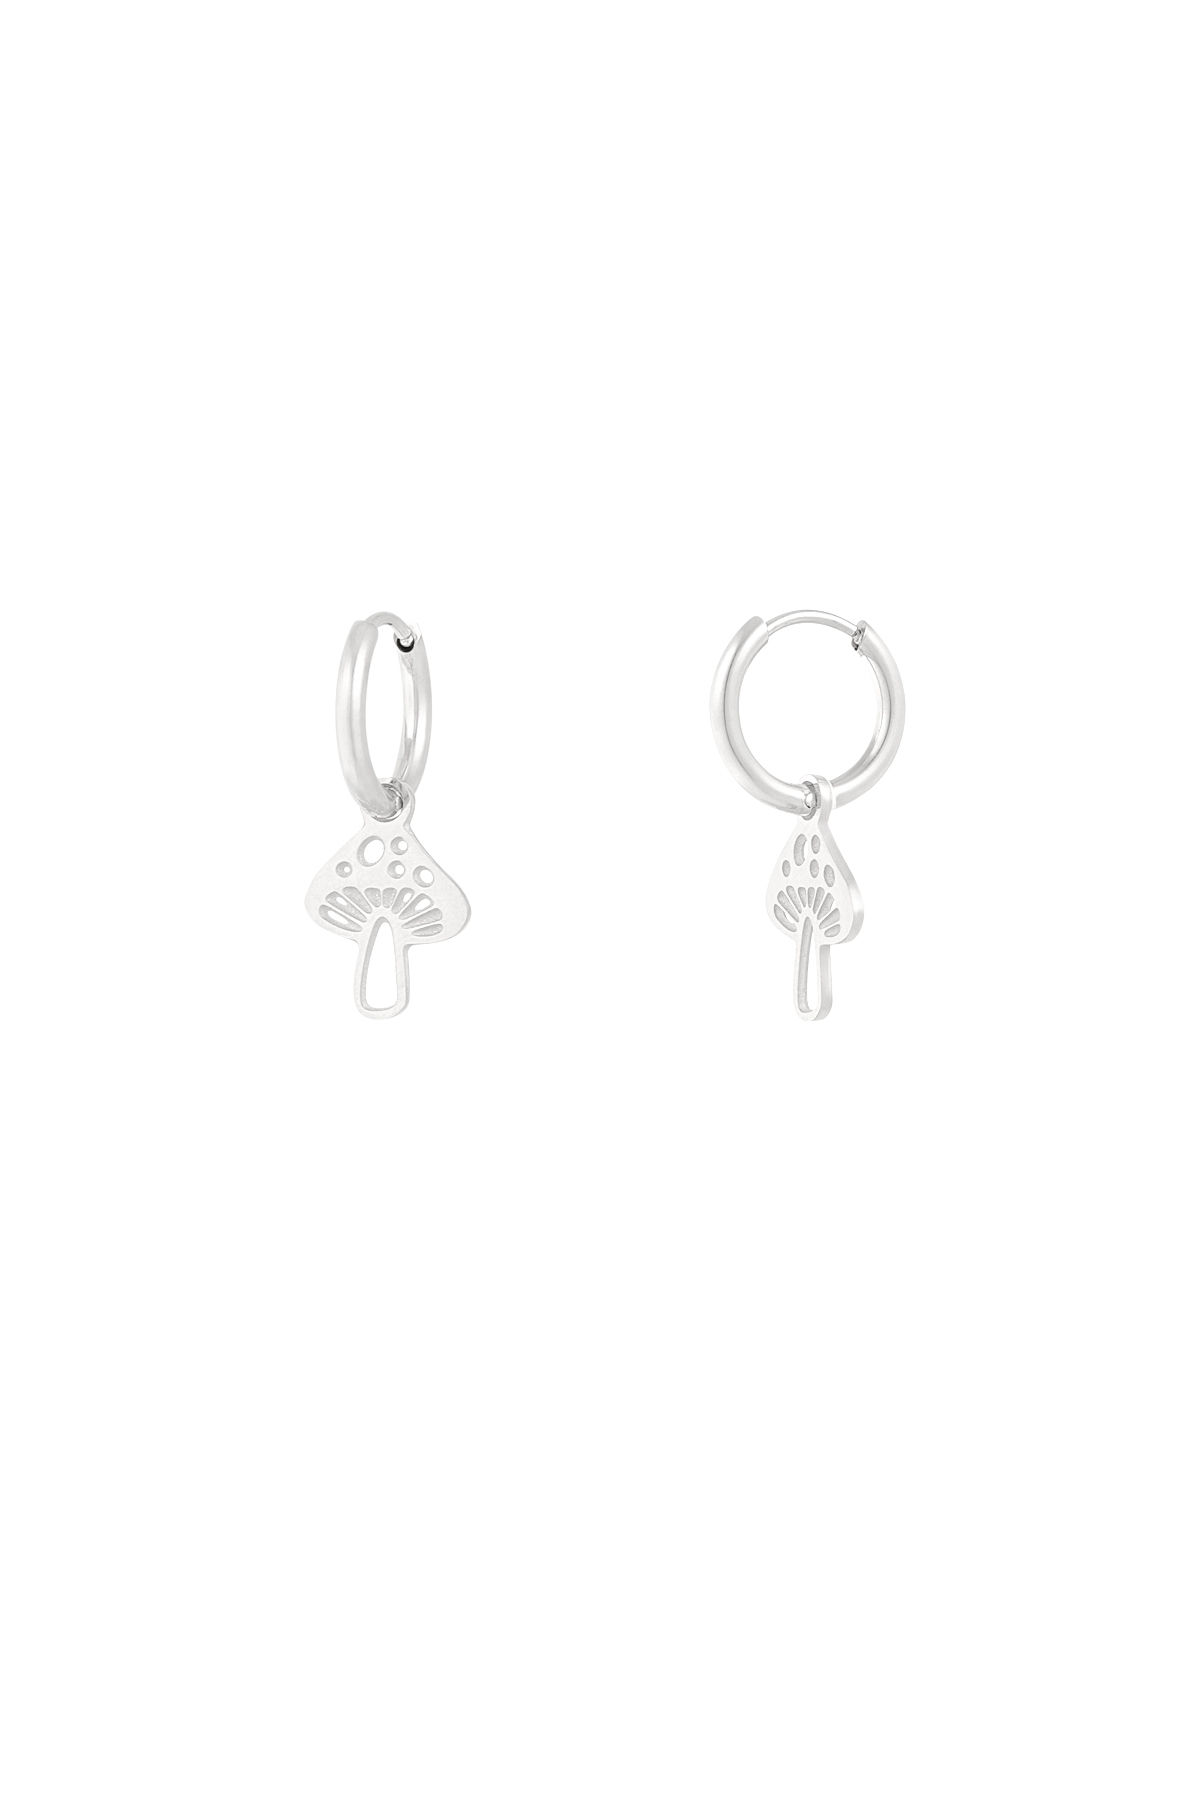 Mushroom earrings - silver 